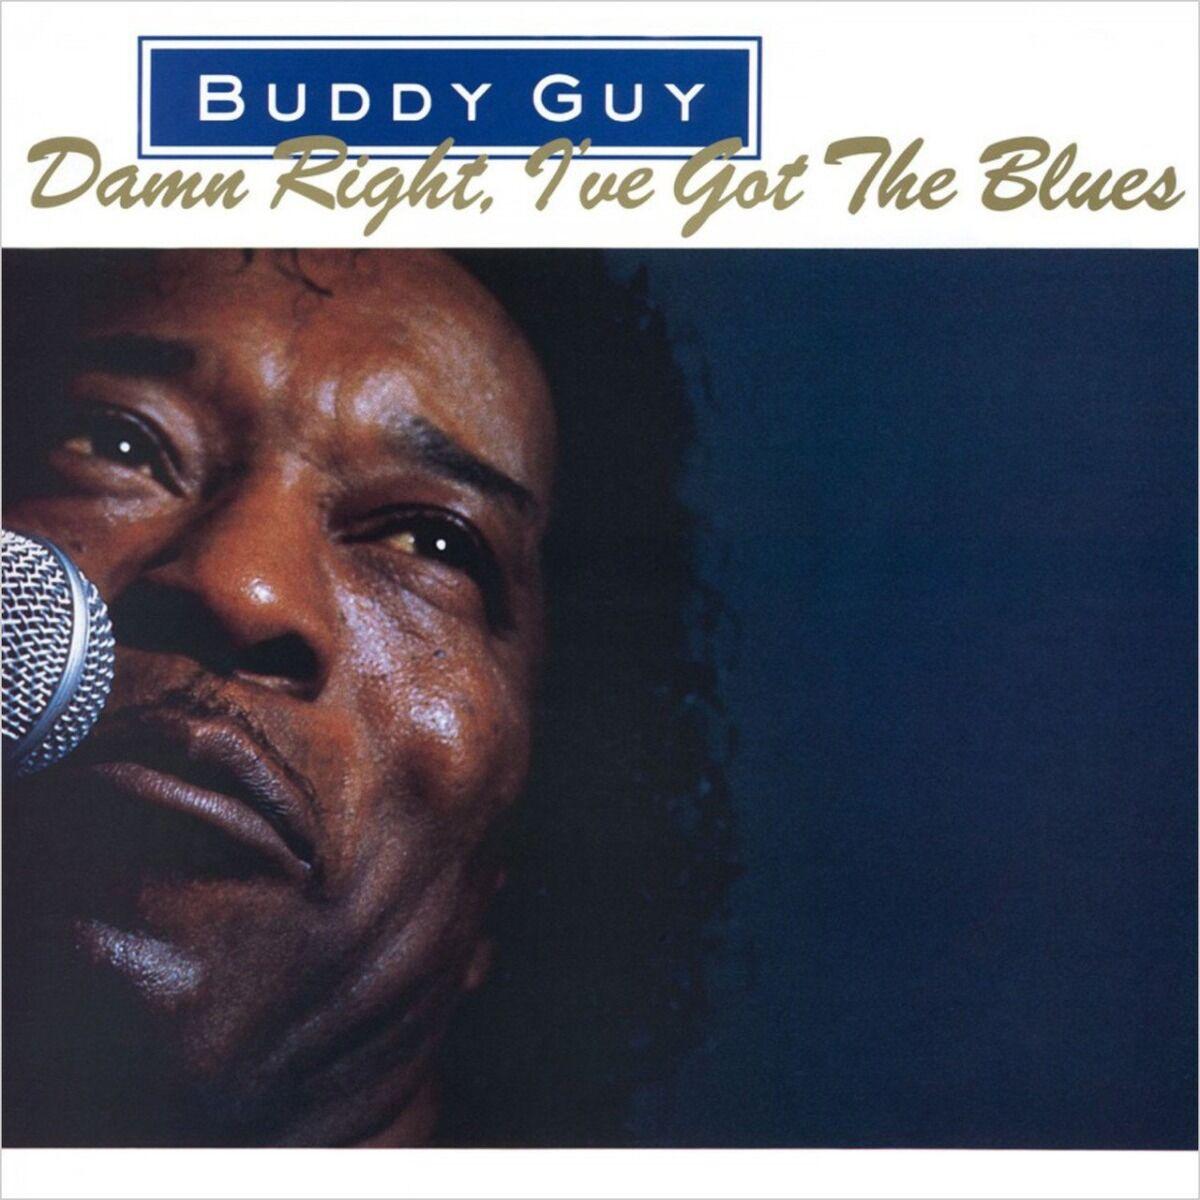 Guy Buddy Damn Right, I've Got The Blues LP